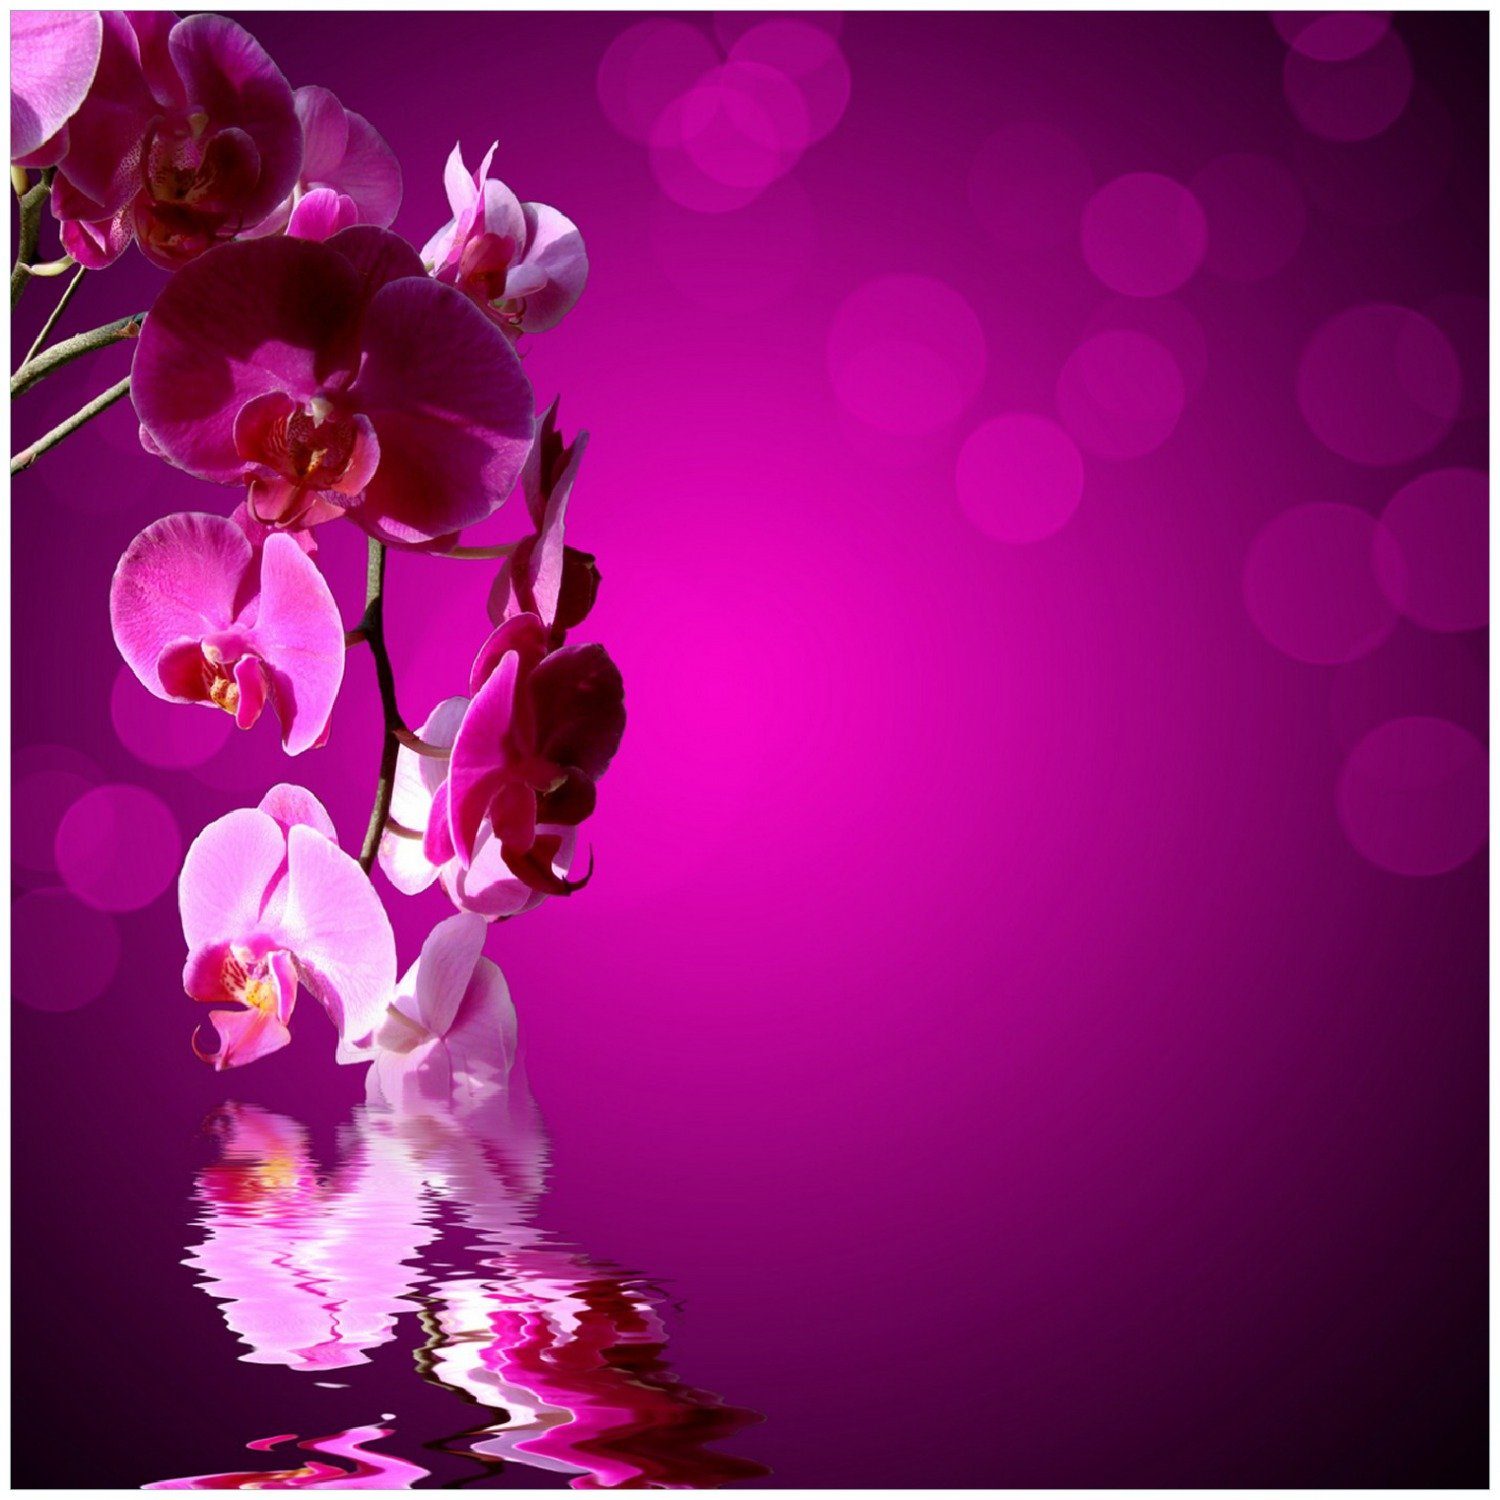 Super günstiger Ausverkauf! Wallario Memoboard Rosafarbene Orchidee Blüten in pink